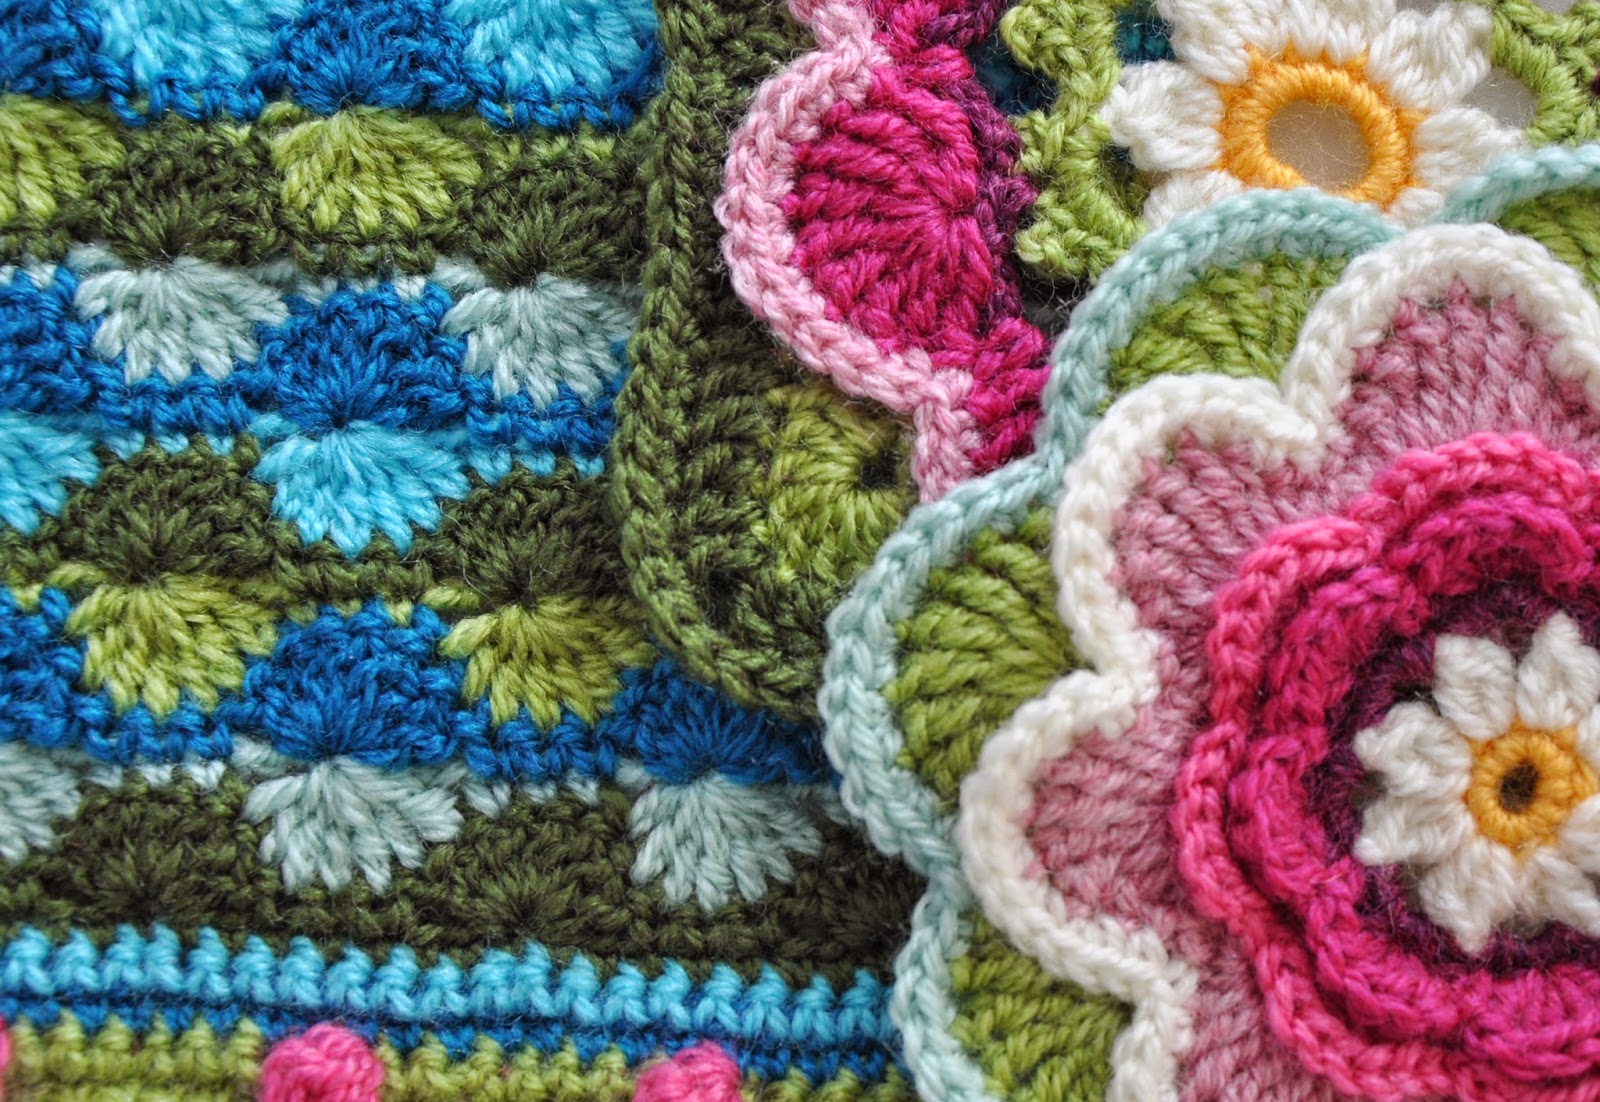 Knit & Crochet Design: Crochet Along